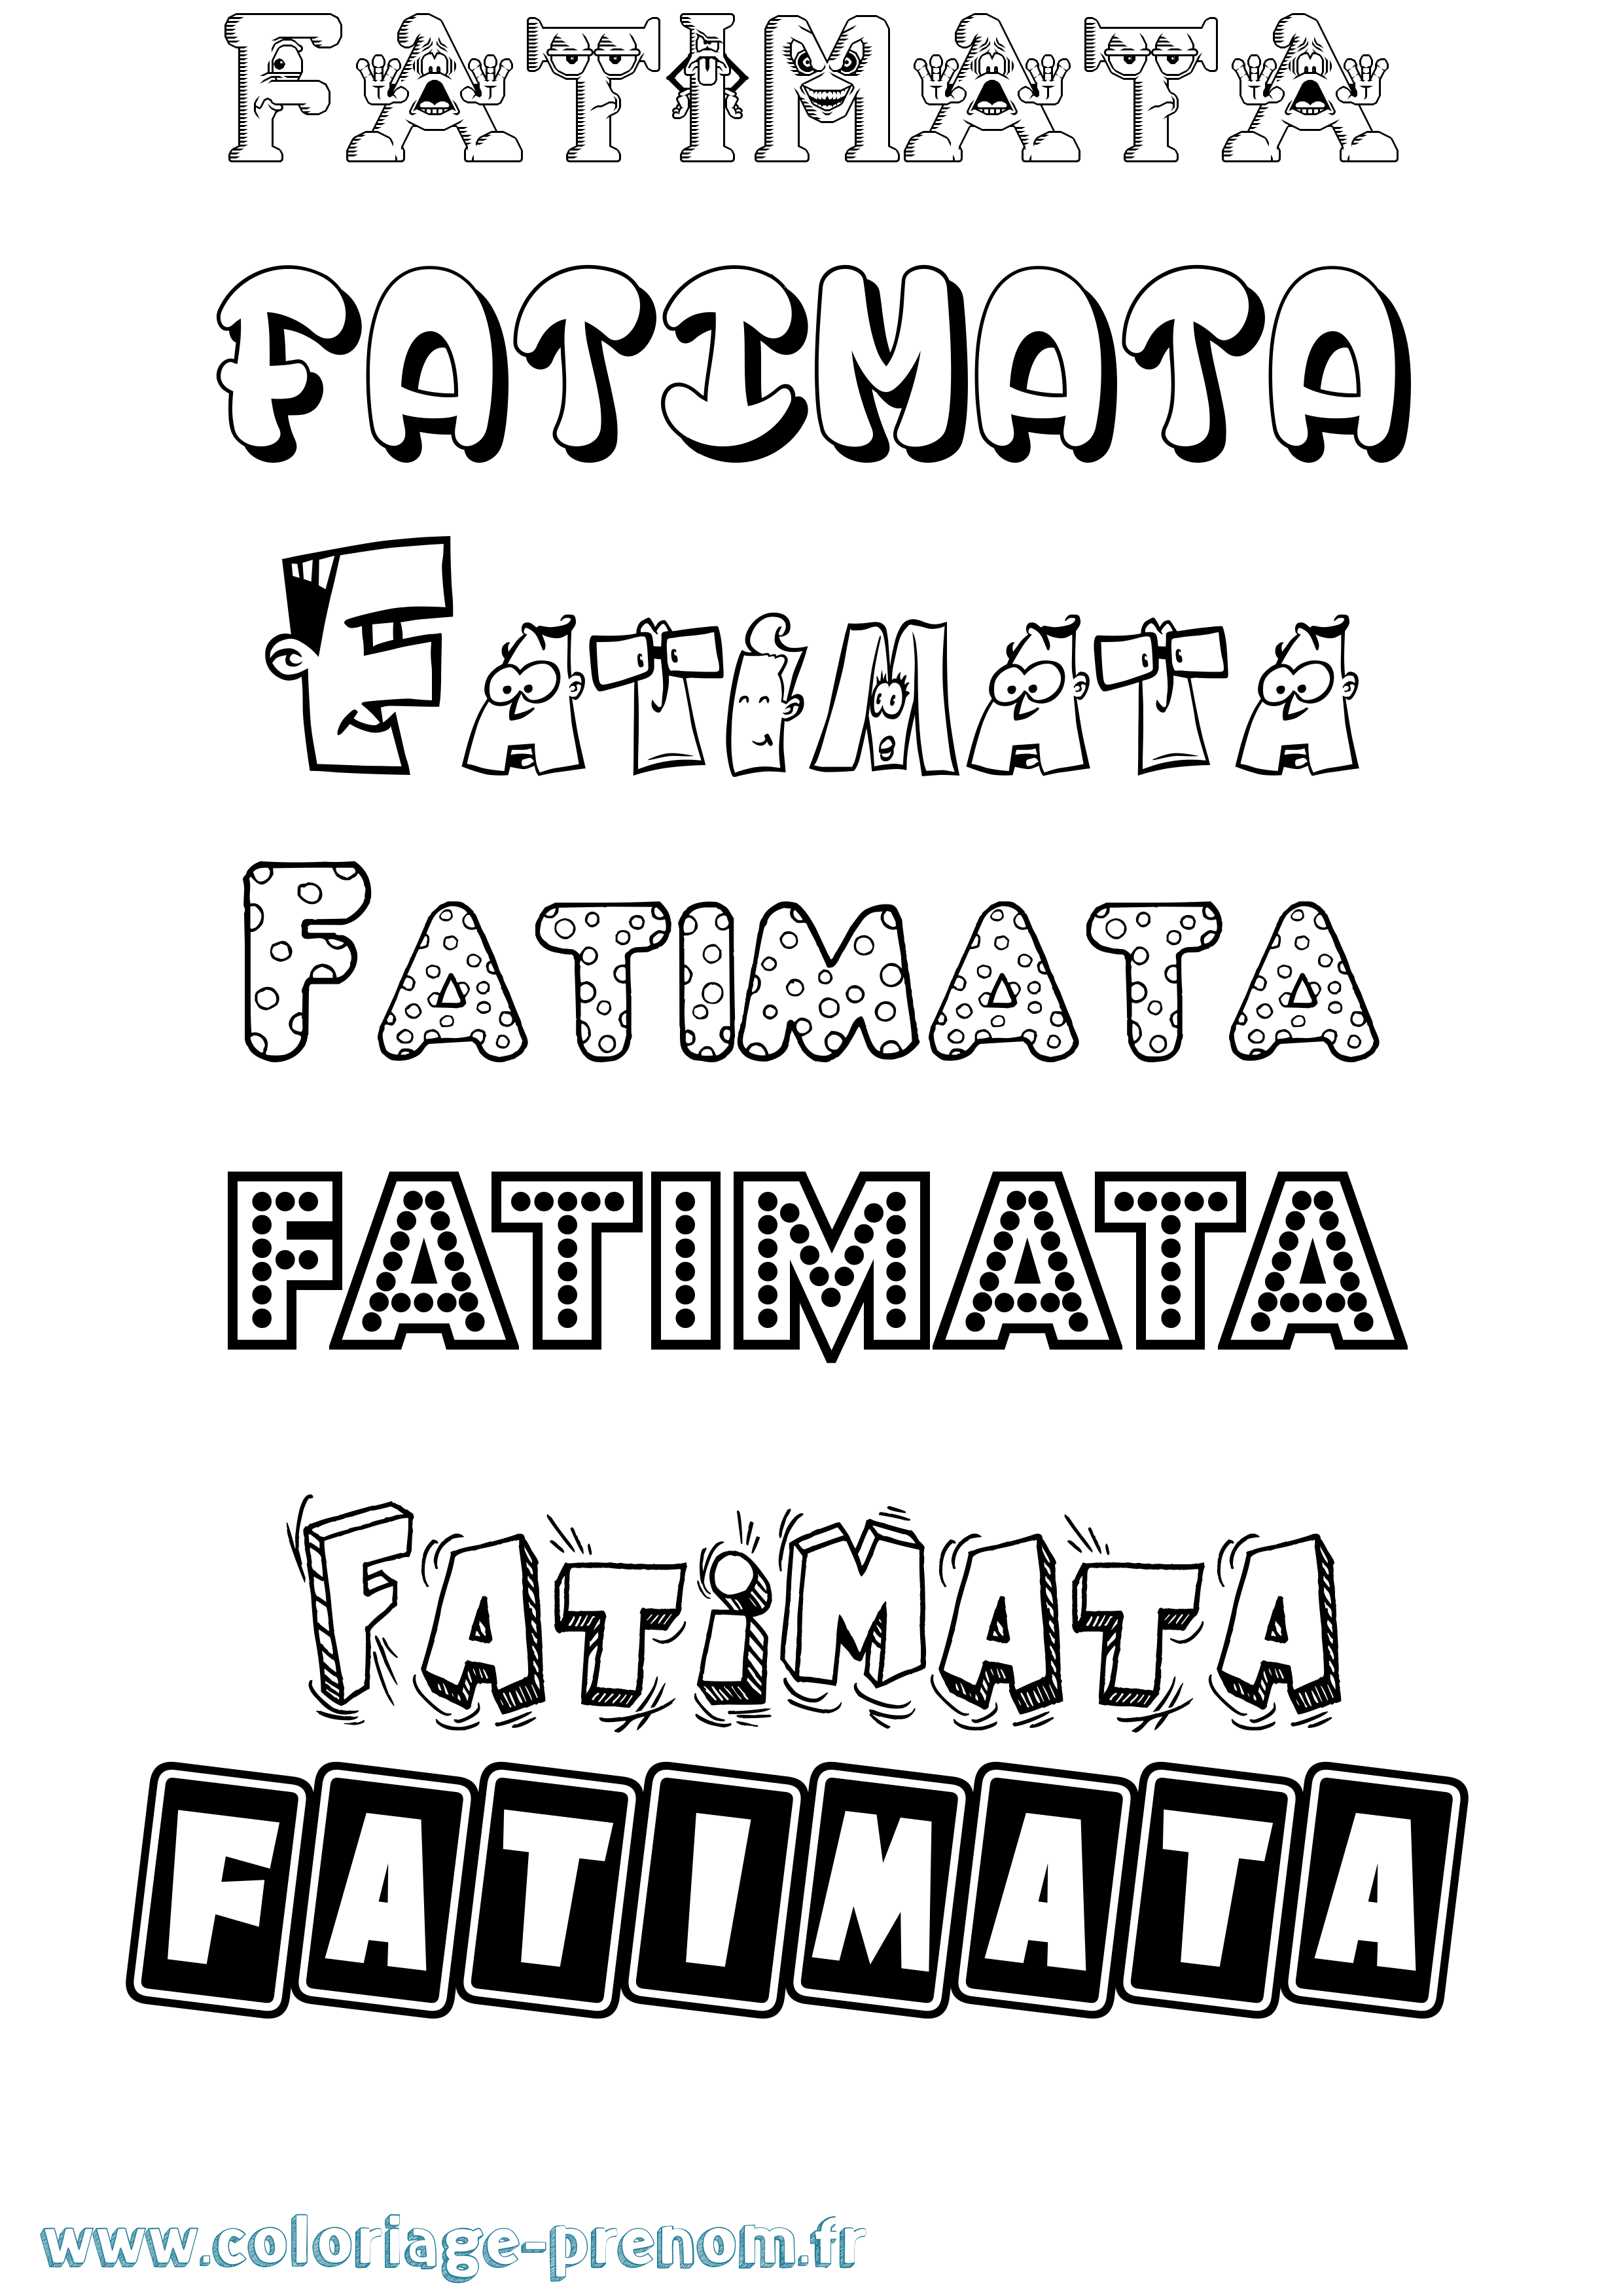 Coloriage prénom Fatimata Fun